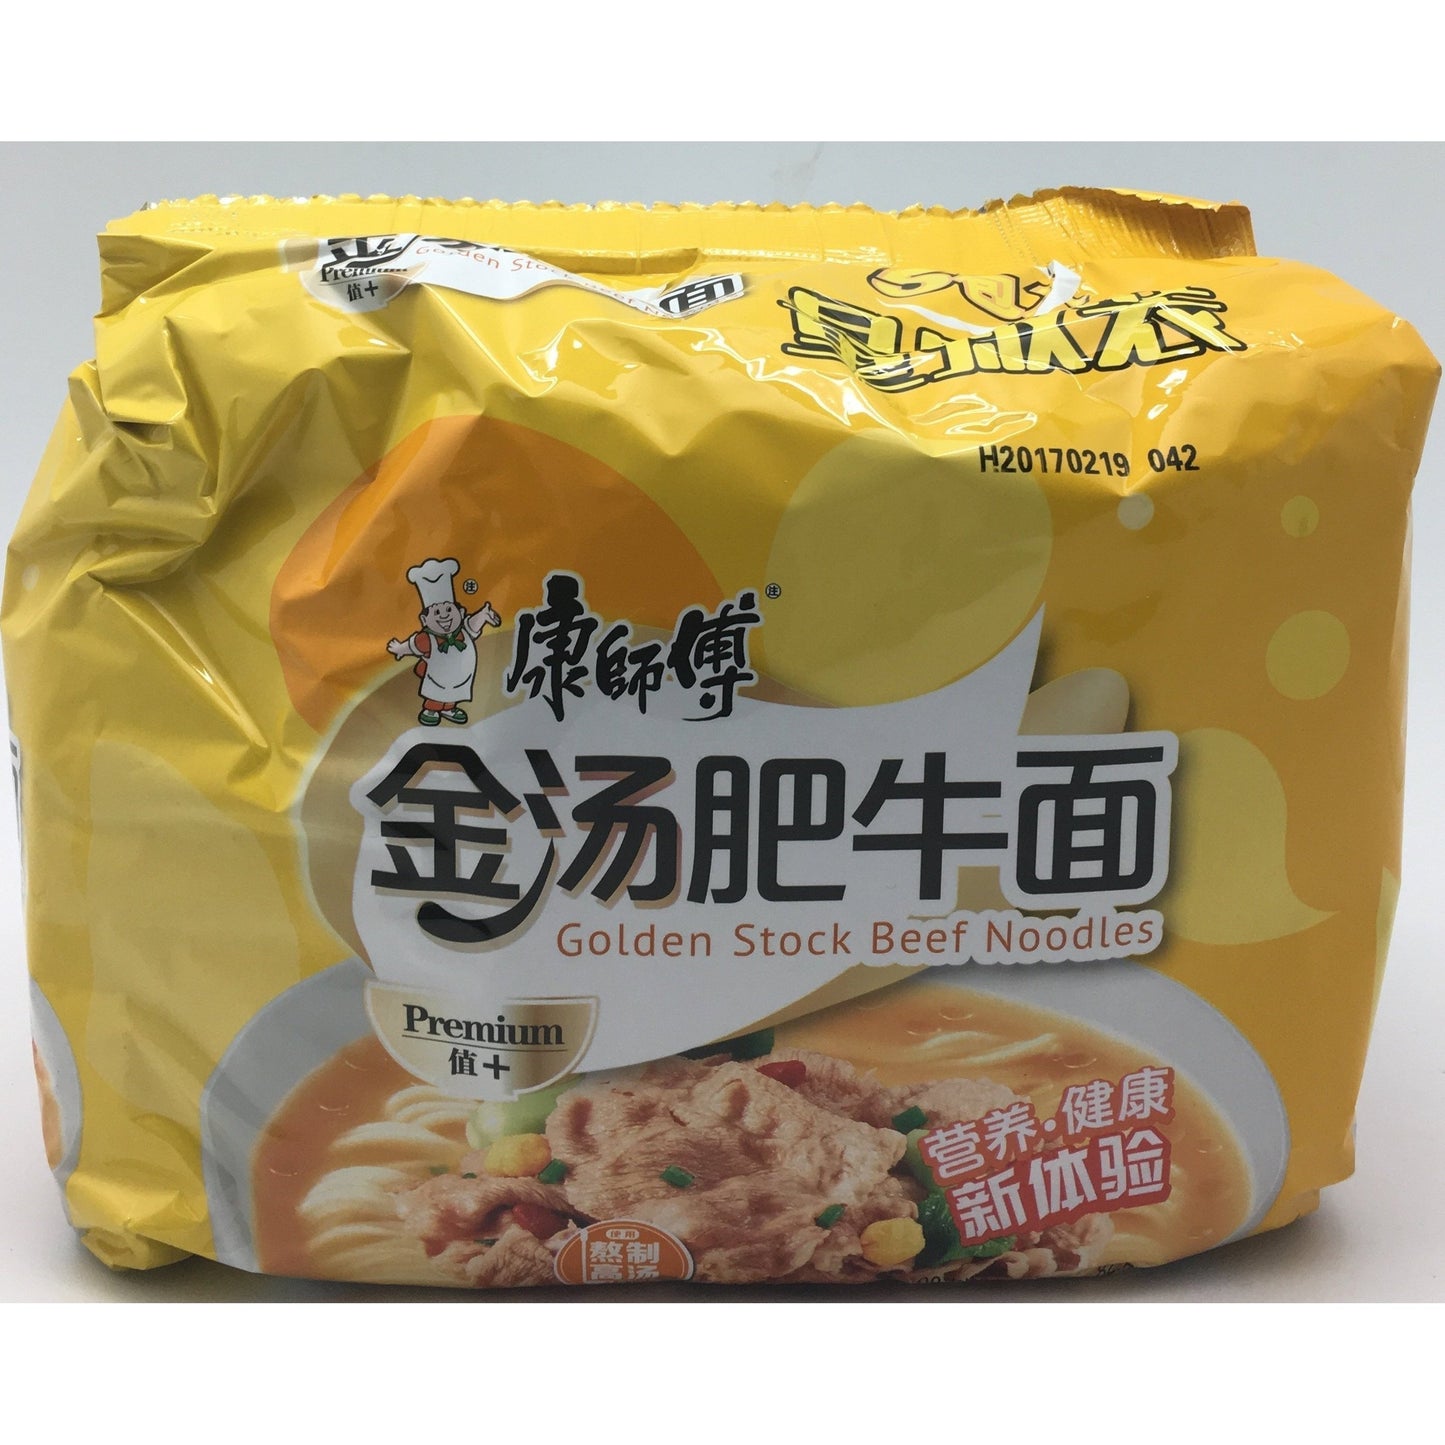 N002BR Kon Brand - Instant Noodle (Golden Stock Beef Noodles) X 5pk - 30pkt / 1CTN - New Eastland Pty Ltd - Asian food wholesalers